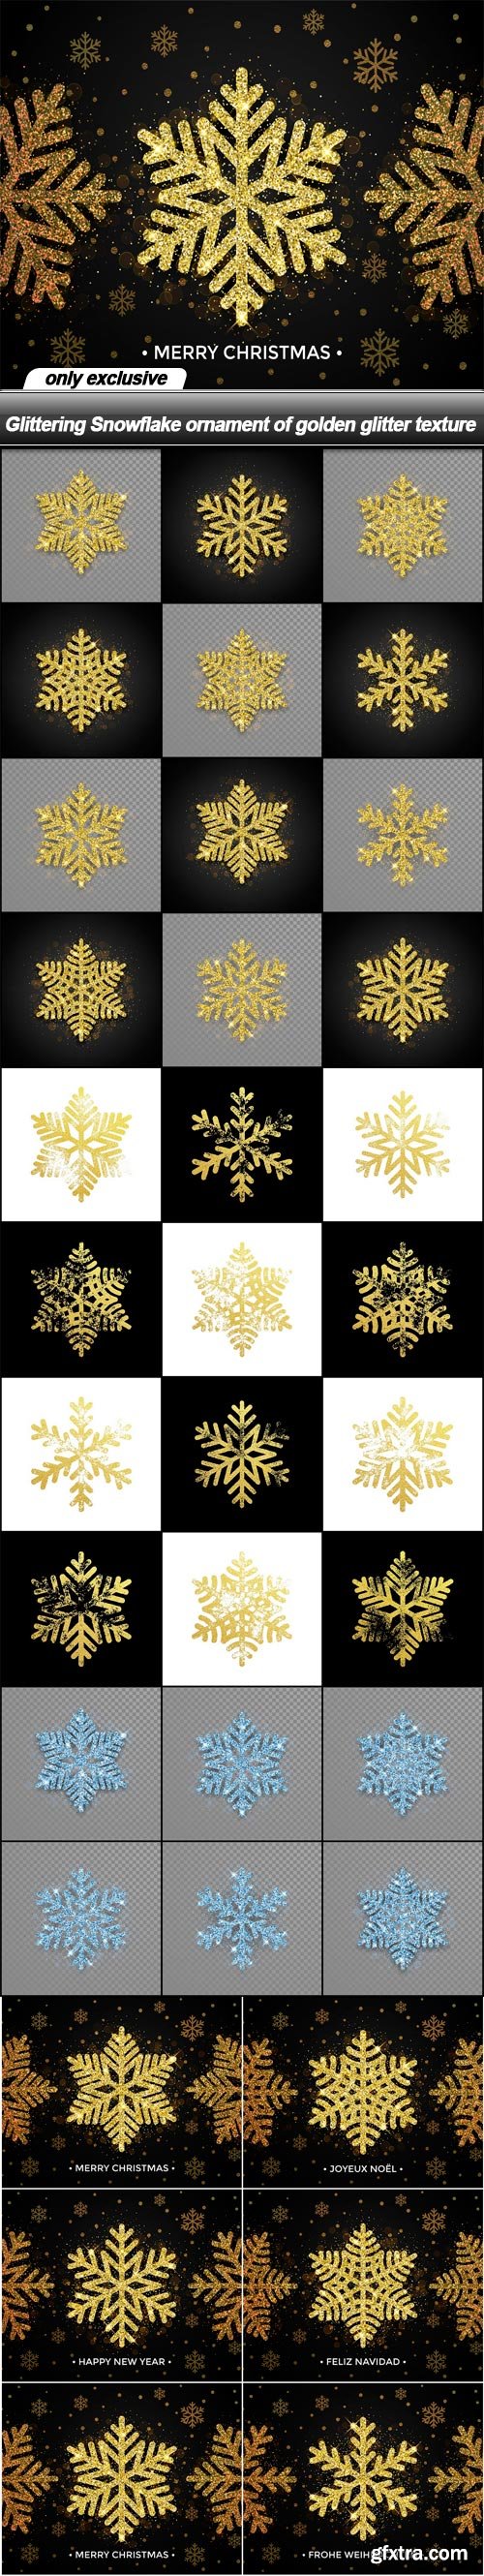 Glittering Snowflake ornament of golden glitter texture - 36 EPS